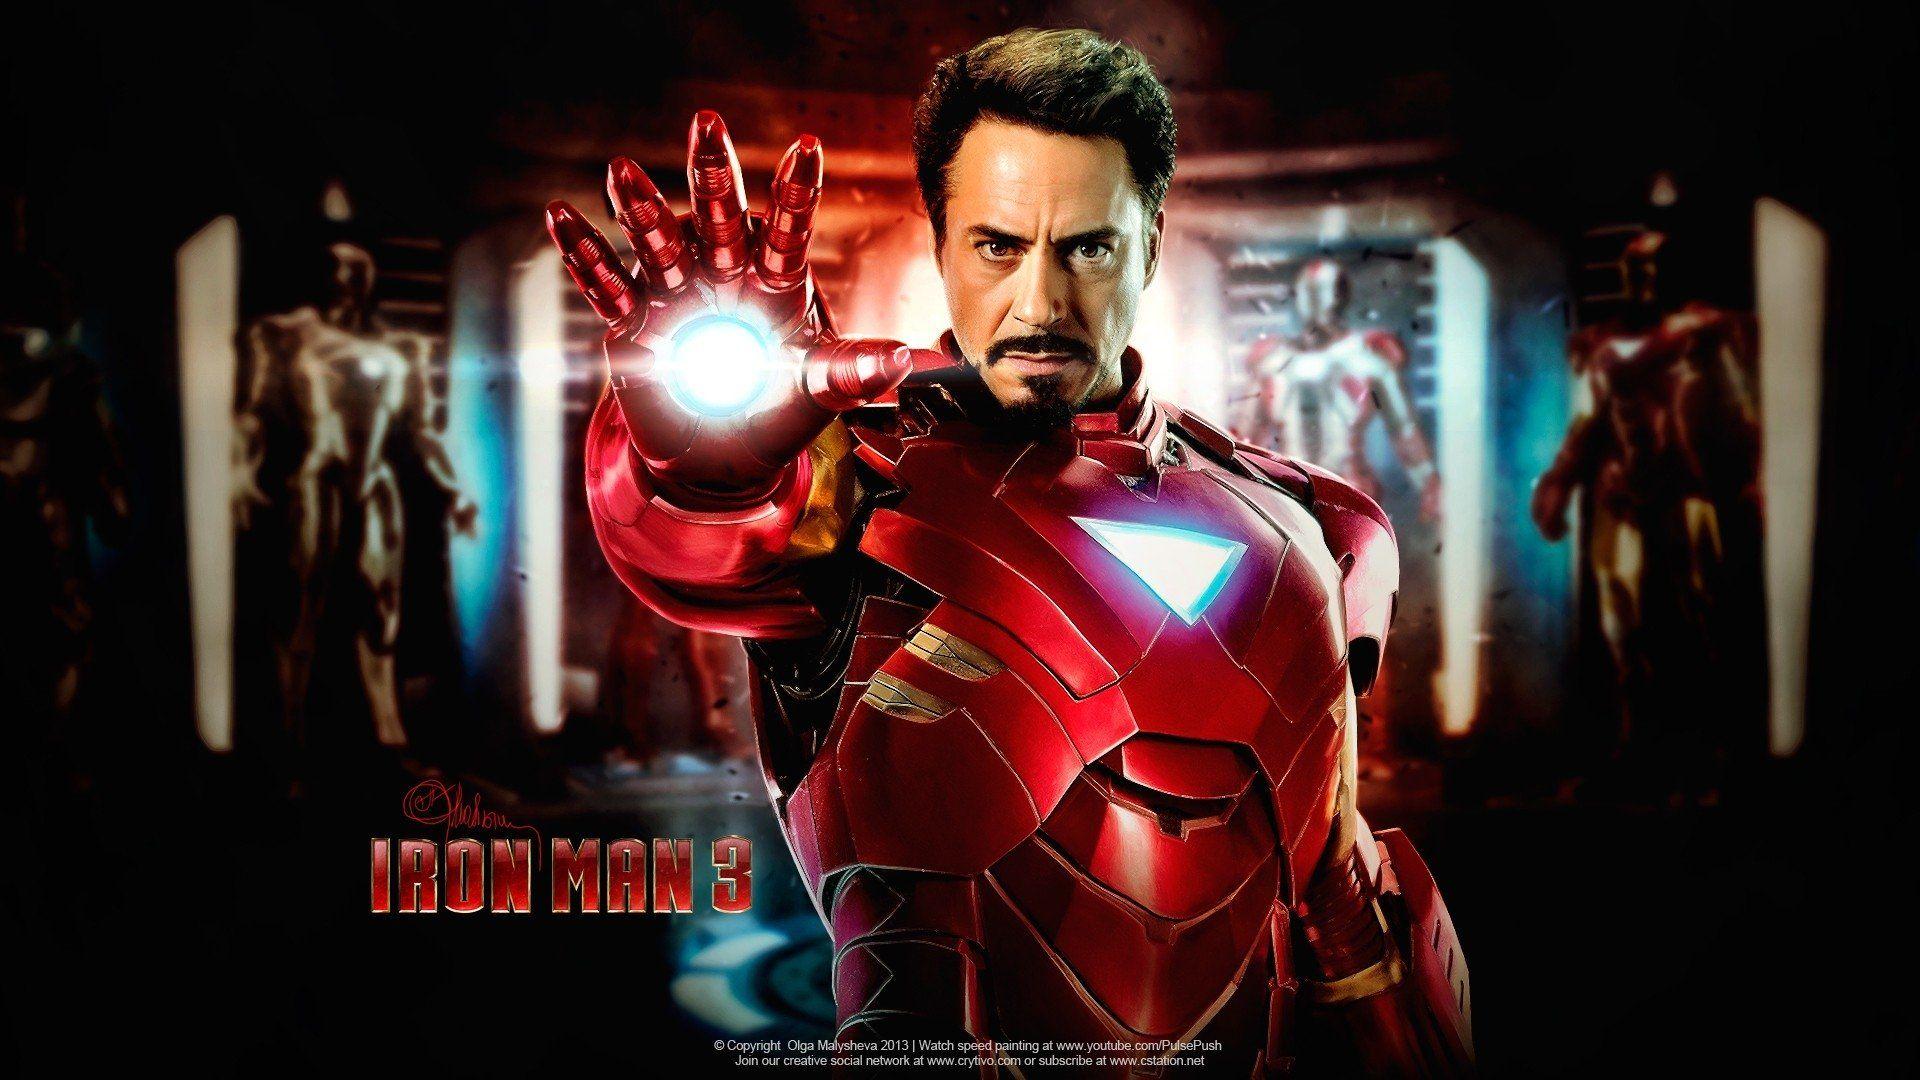 120 Iron Man 3 HD Wallpapers